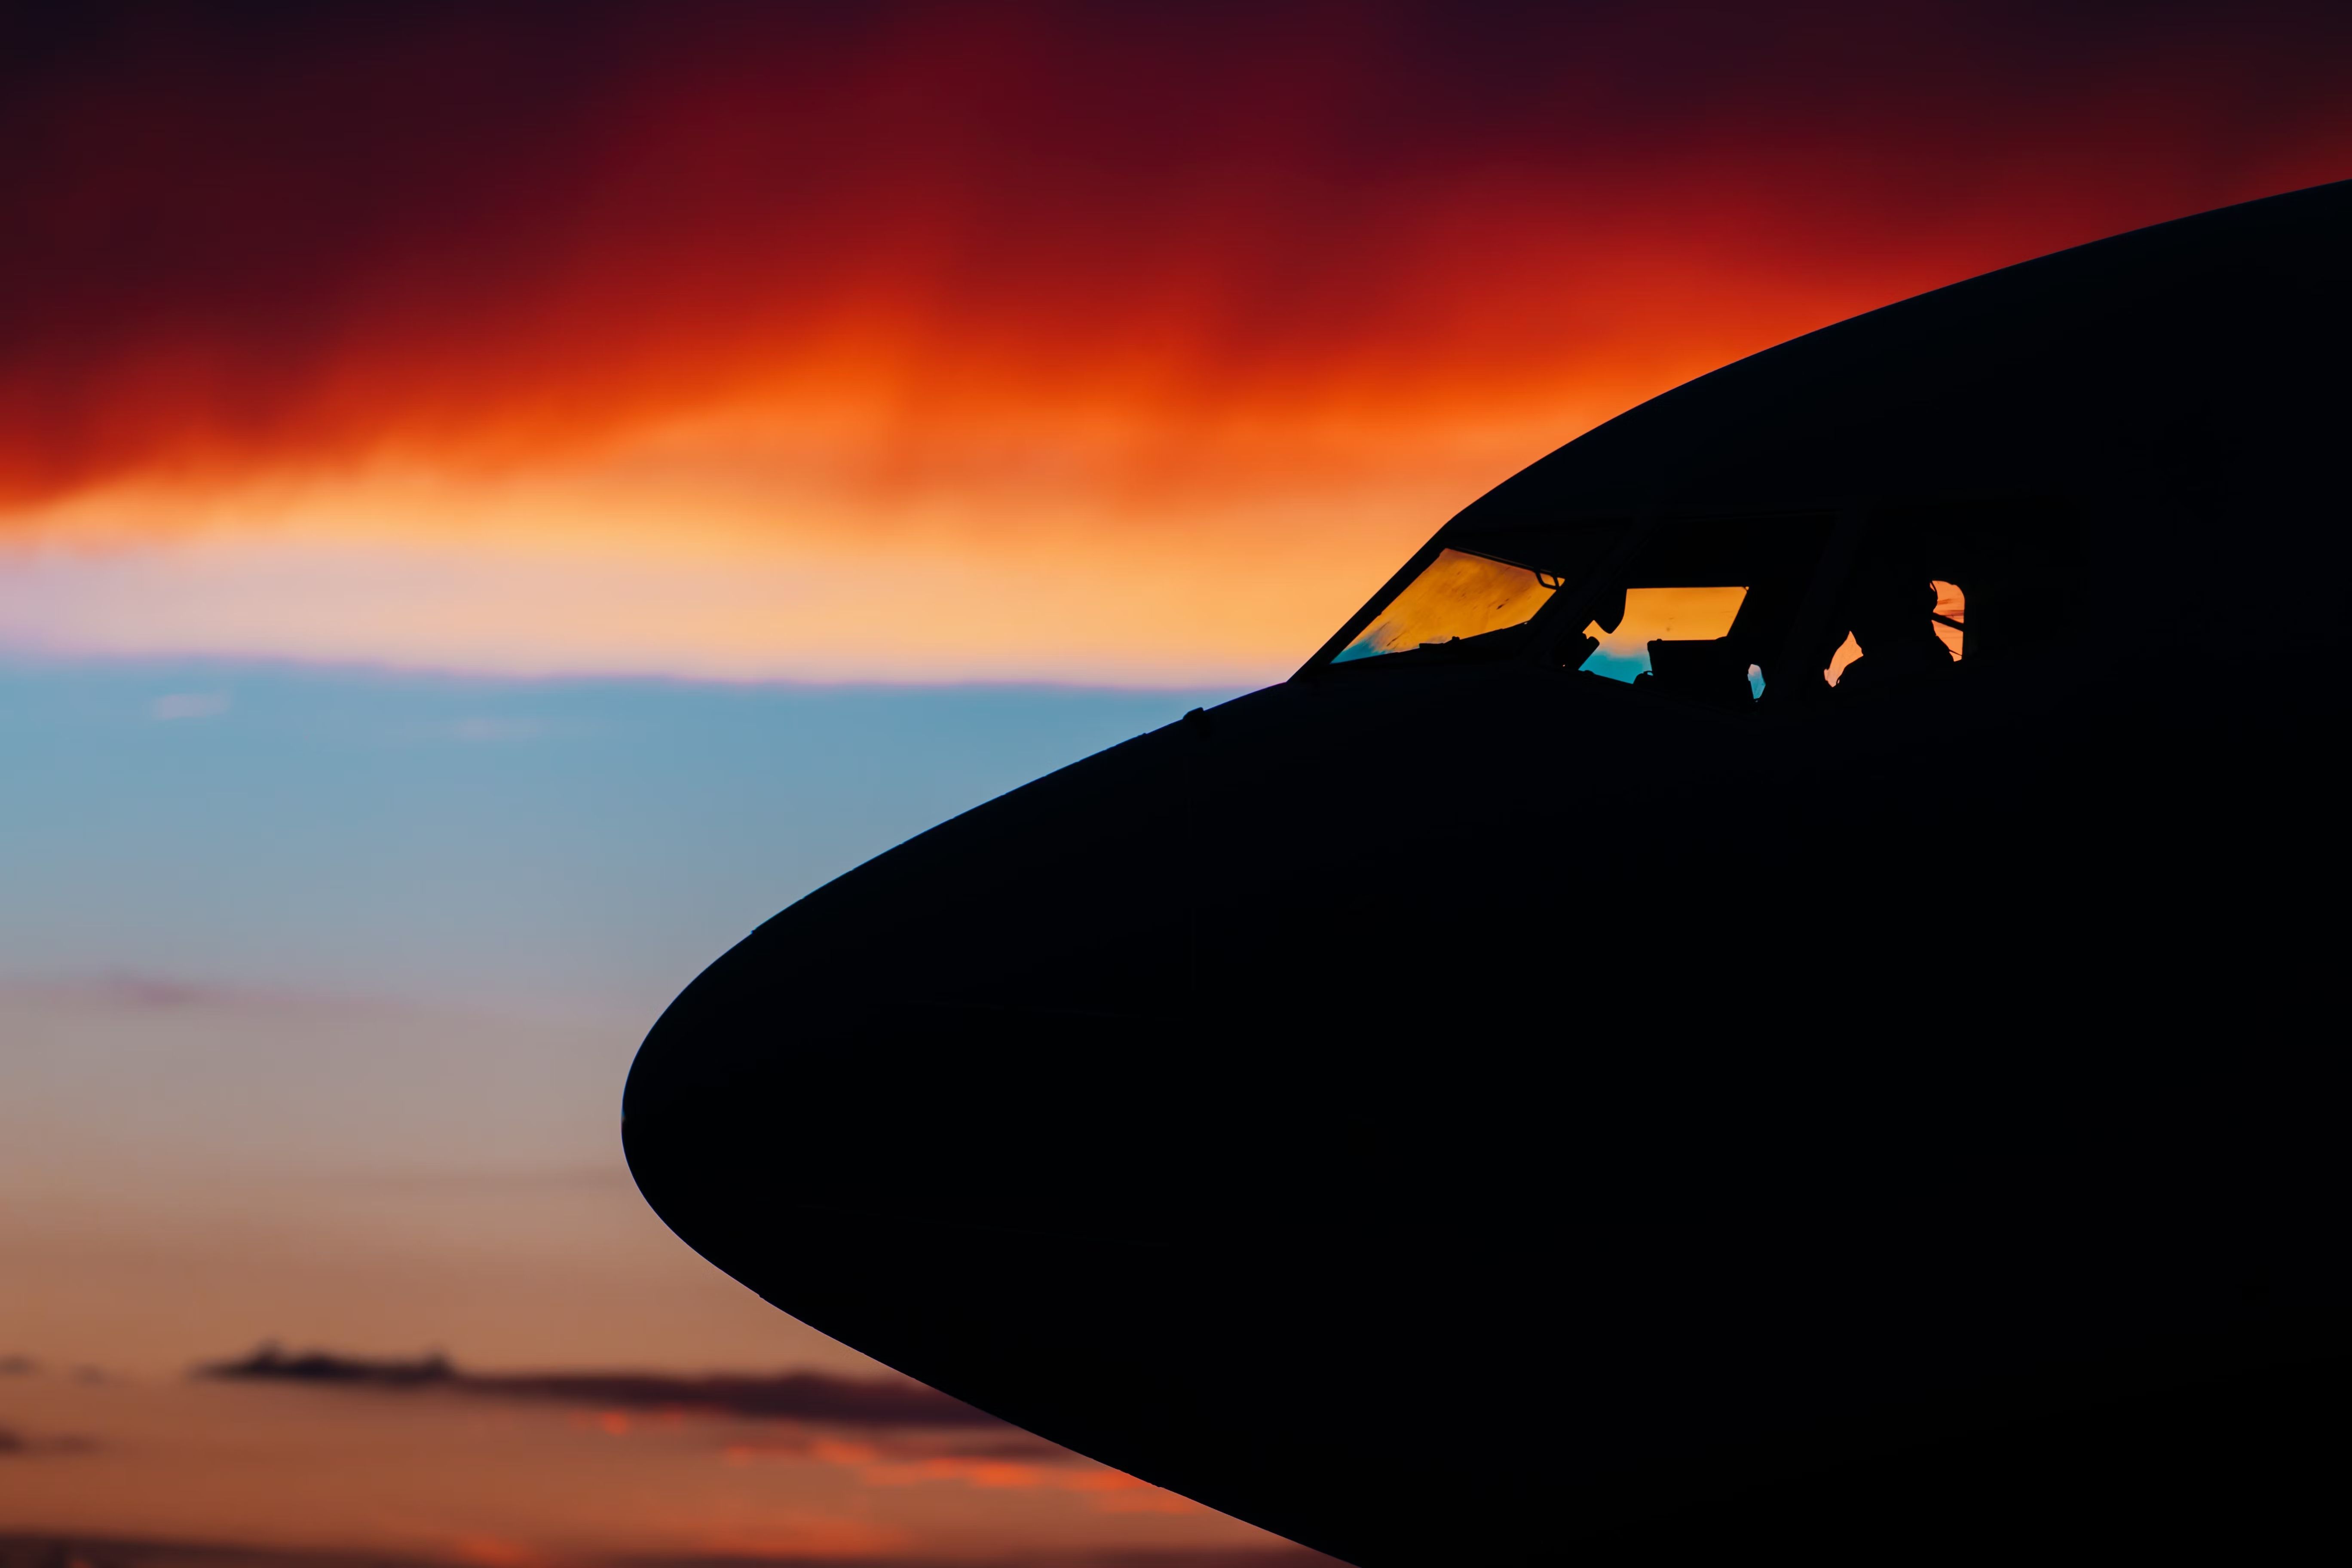 An aircraft at sunset